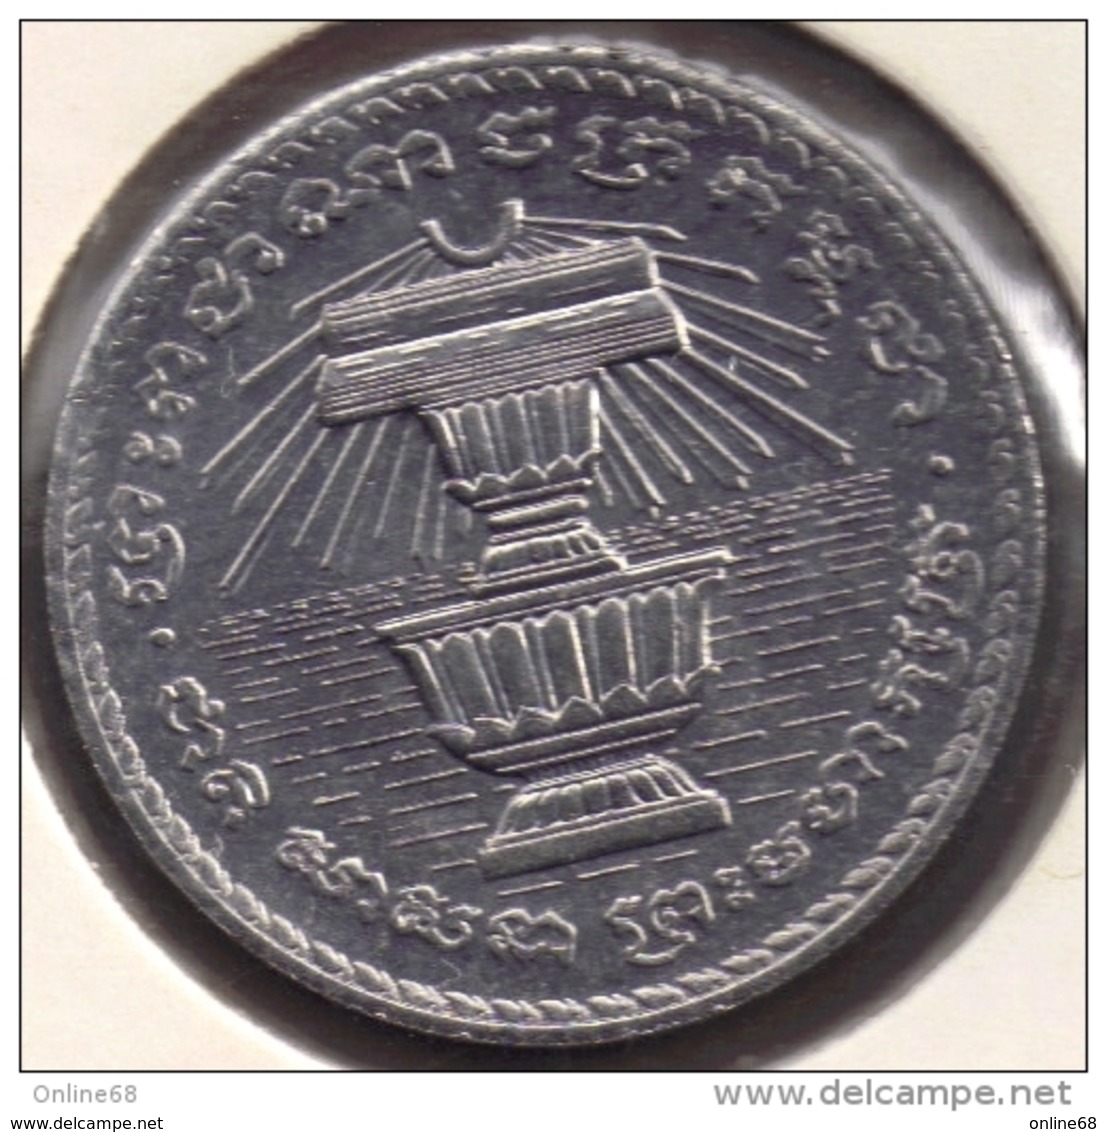 LOT 4 COINS JAPAN 1 SEN 1922 - CAMBODIA 200 RIELS 1994 - CHINA 1 YUAN 1991 - MONGOLIA 50 MONGO 1981 - Vrac - Monnaies